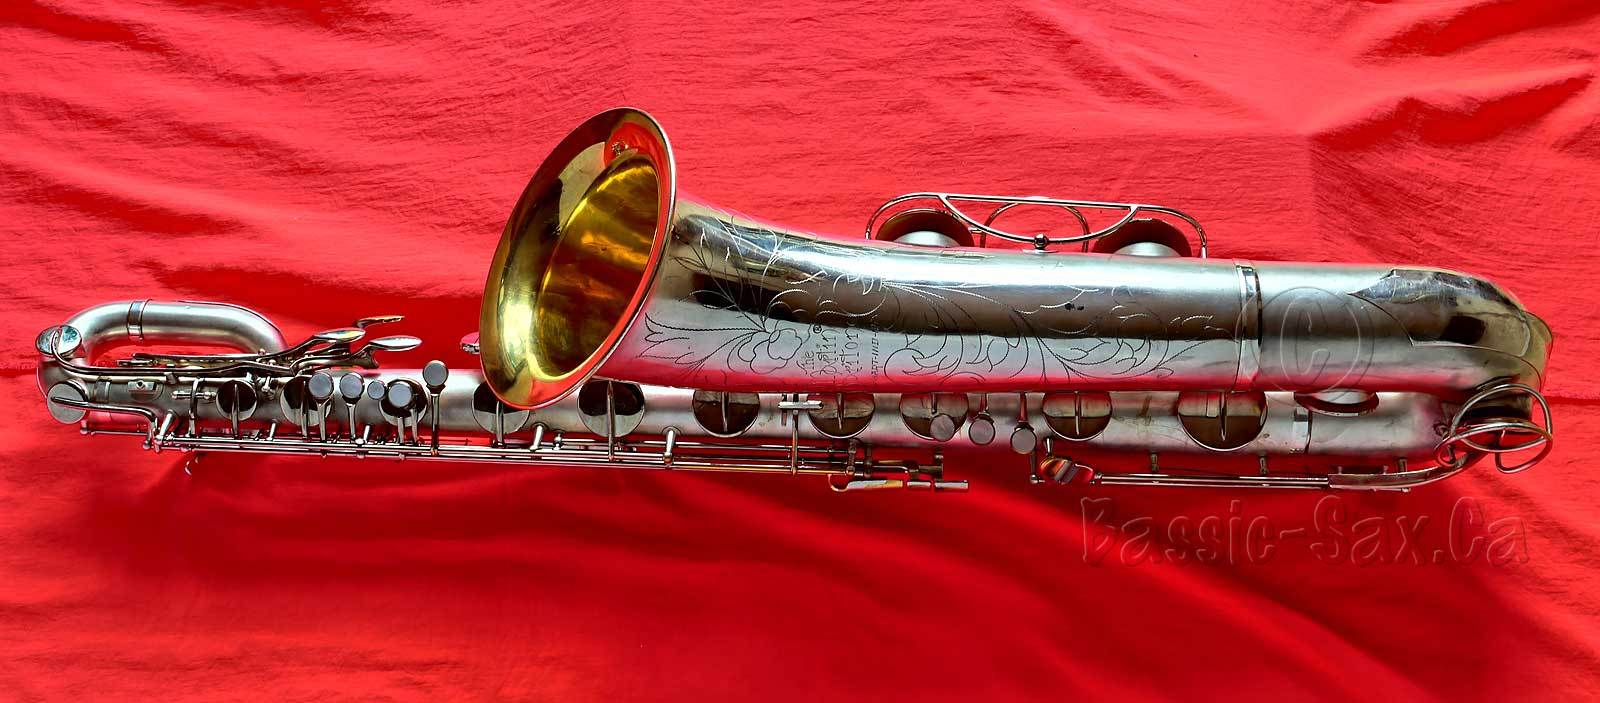 La Fleur Alto Saxophone On eBay: Edited March 11, 2010